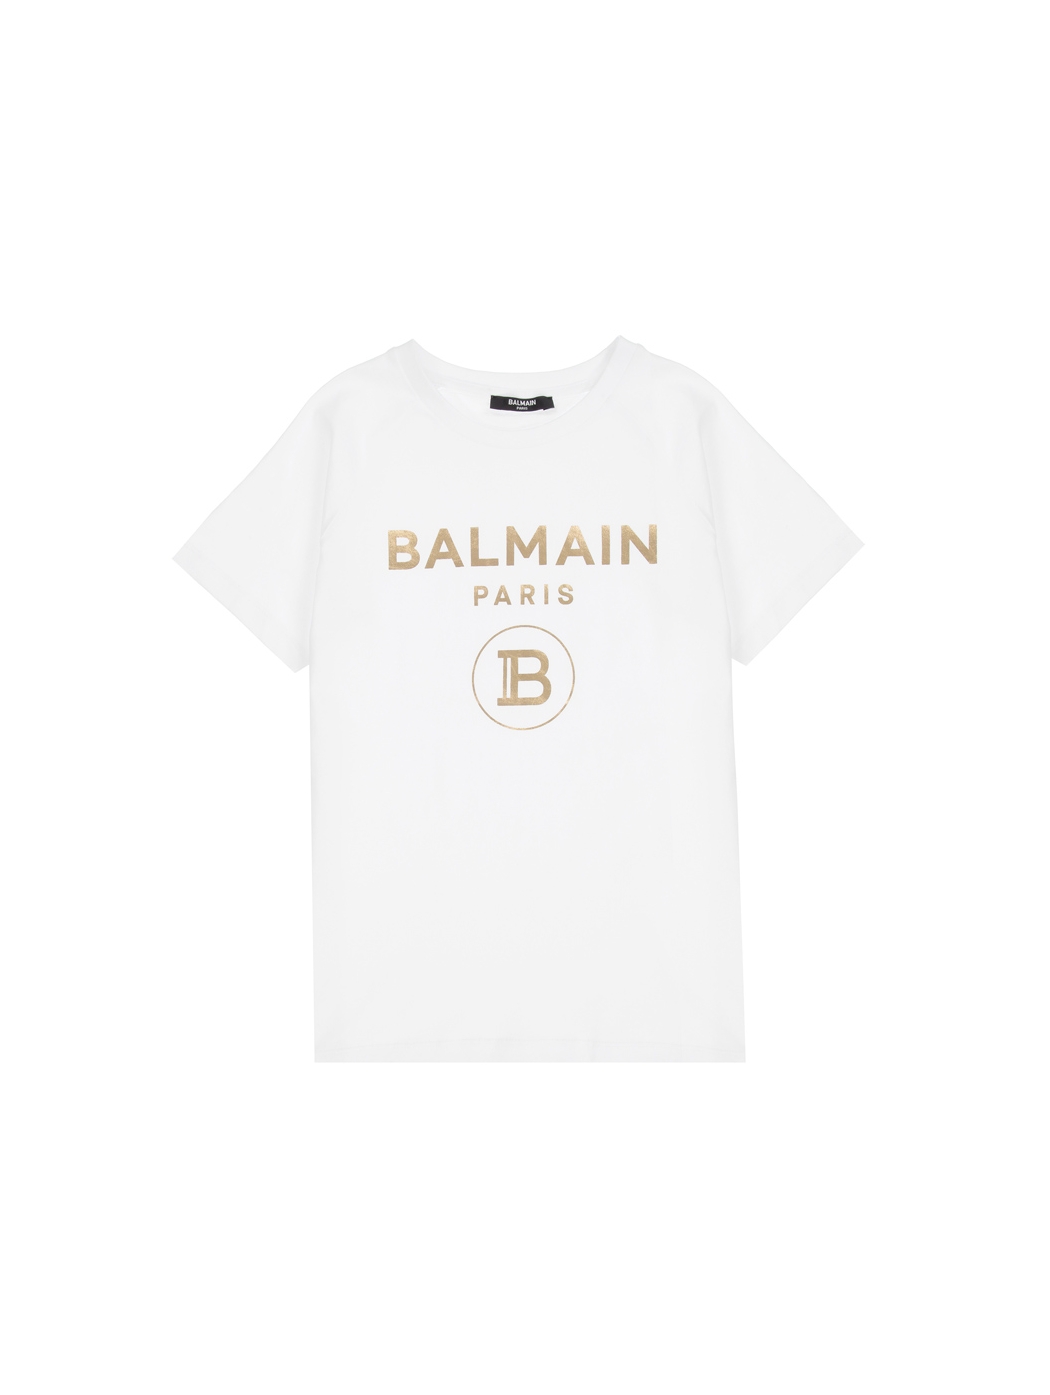 BALMAIN WHITE T-SHIRT GOLDEN LOGO